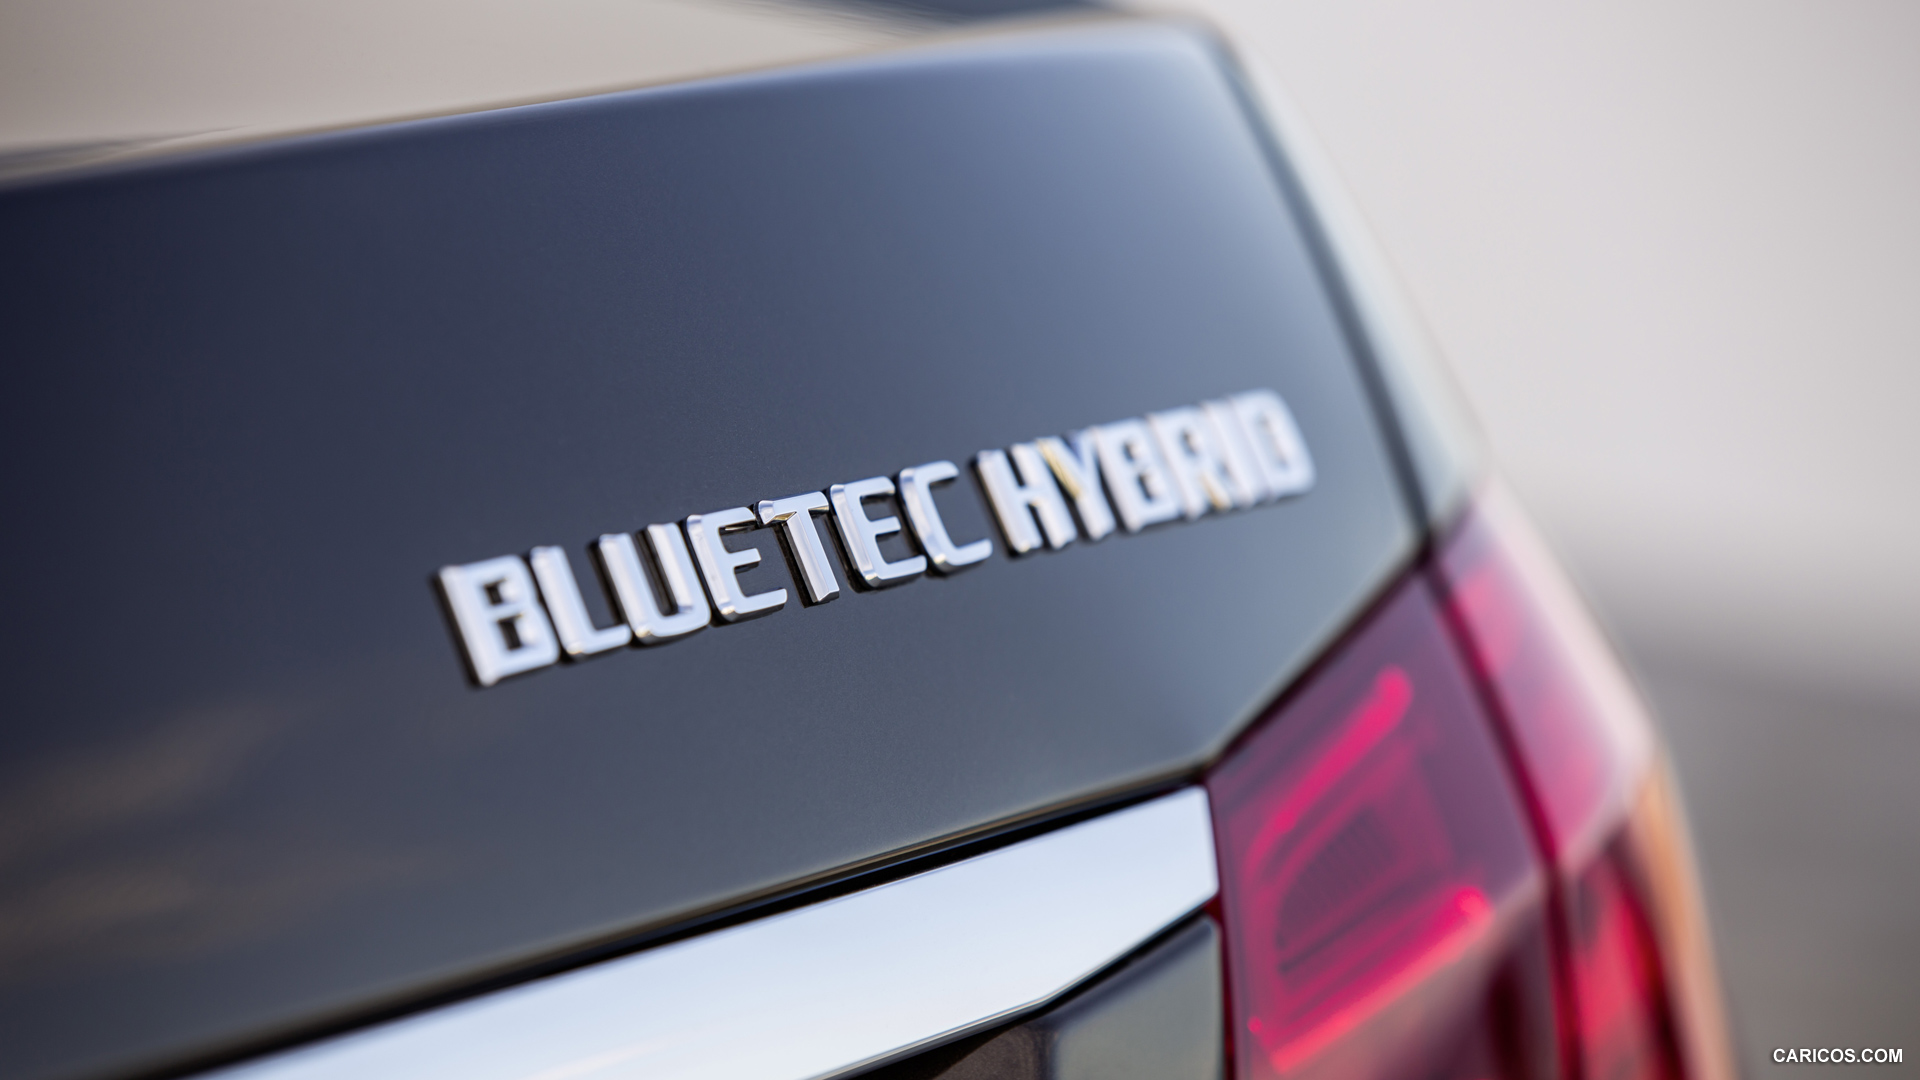 2014 Mercedes-Benz E-Class BlueTEC HYBRID - Badge, #45 of 72